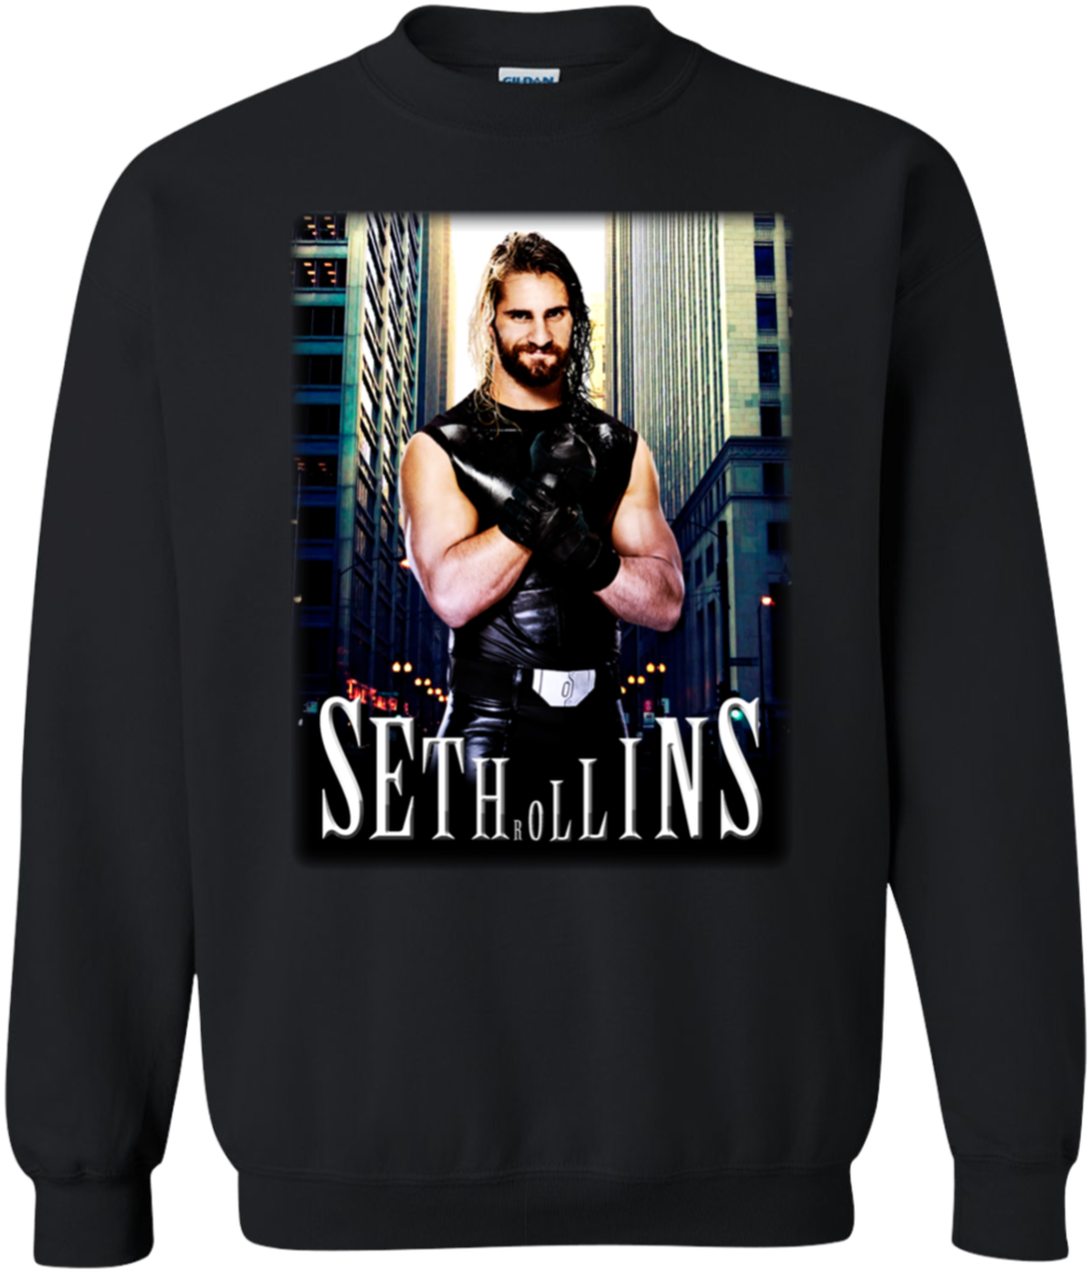 Seth Rollins Sweatshirt Design